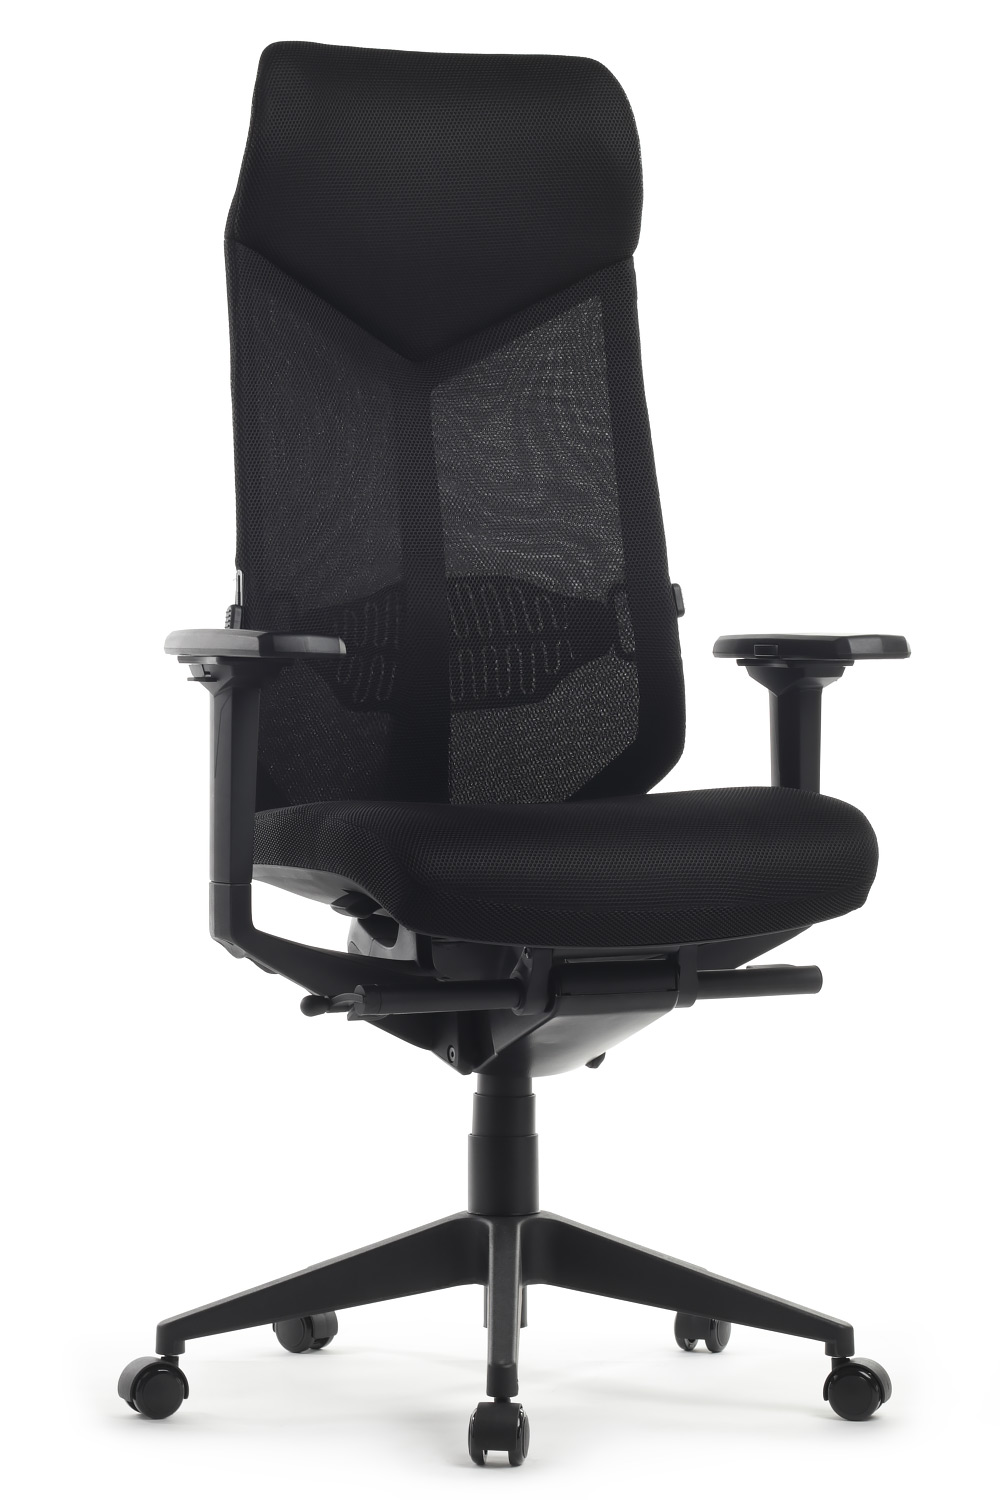 Riva Chair RCH 8074+чёрная сетка.